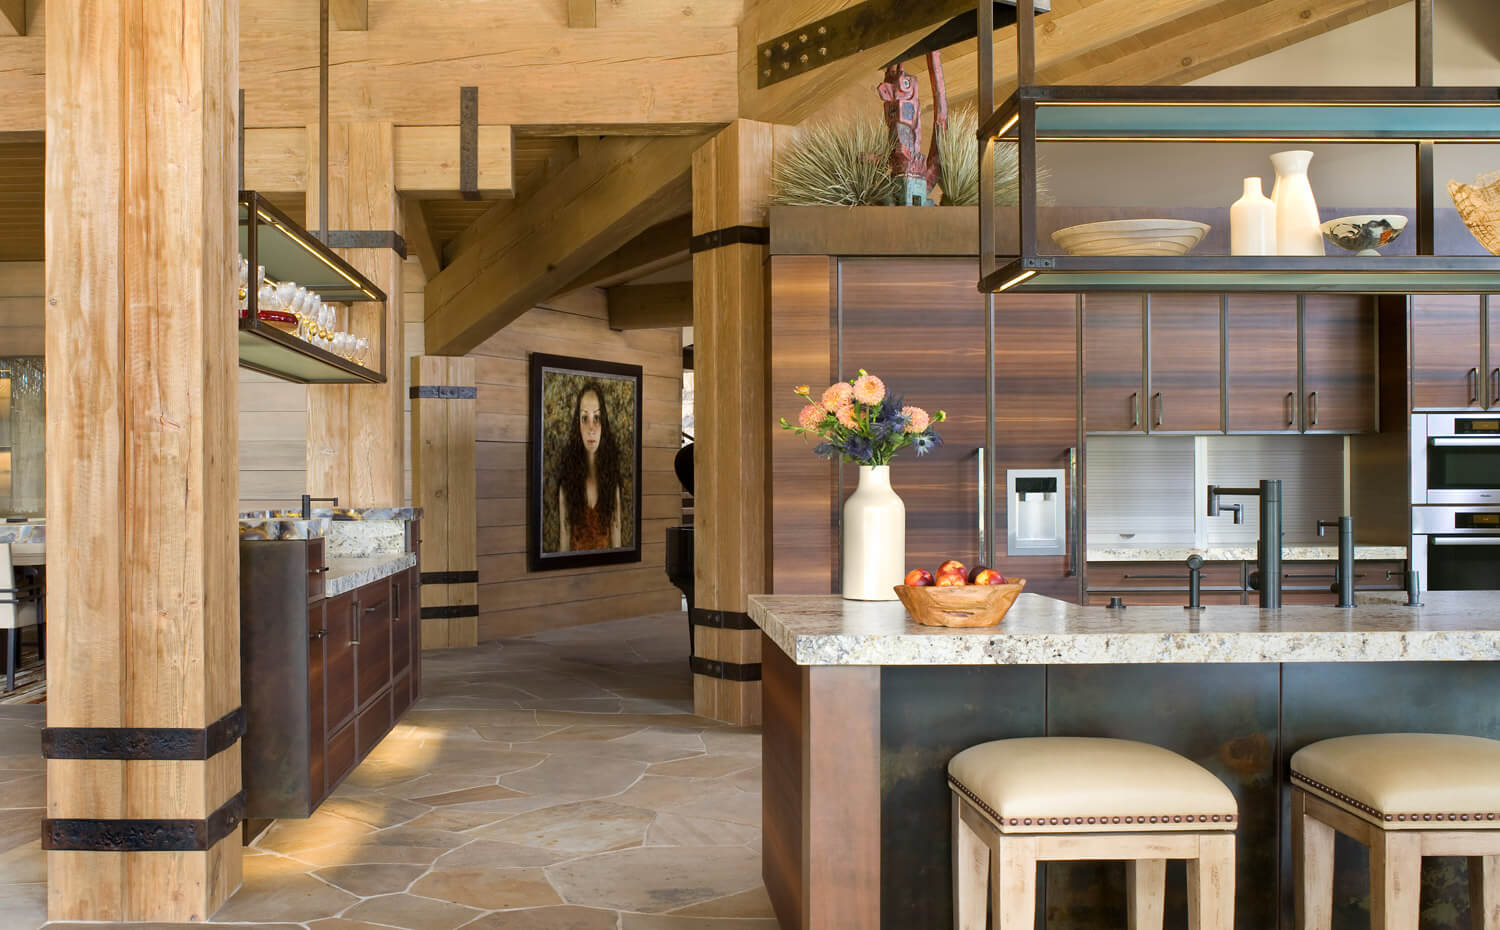 exquisite kitchen design hiding clutter